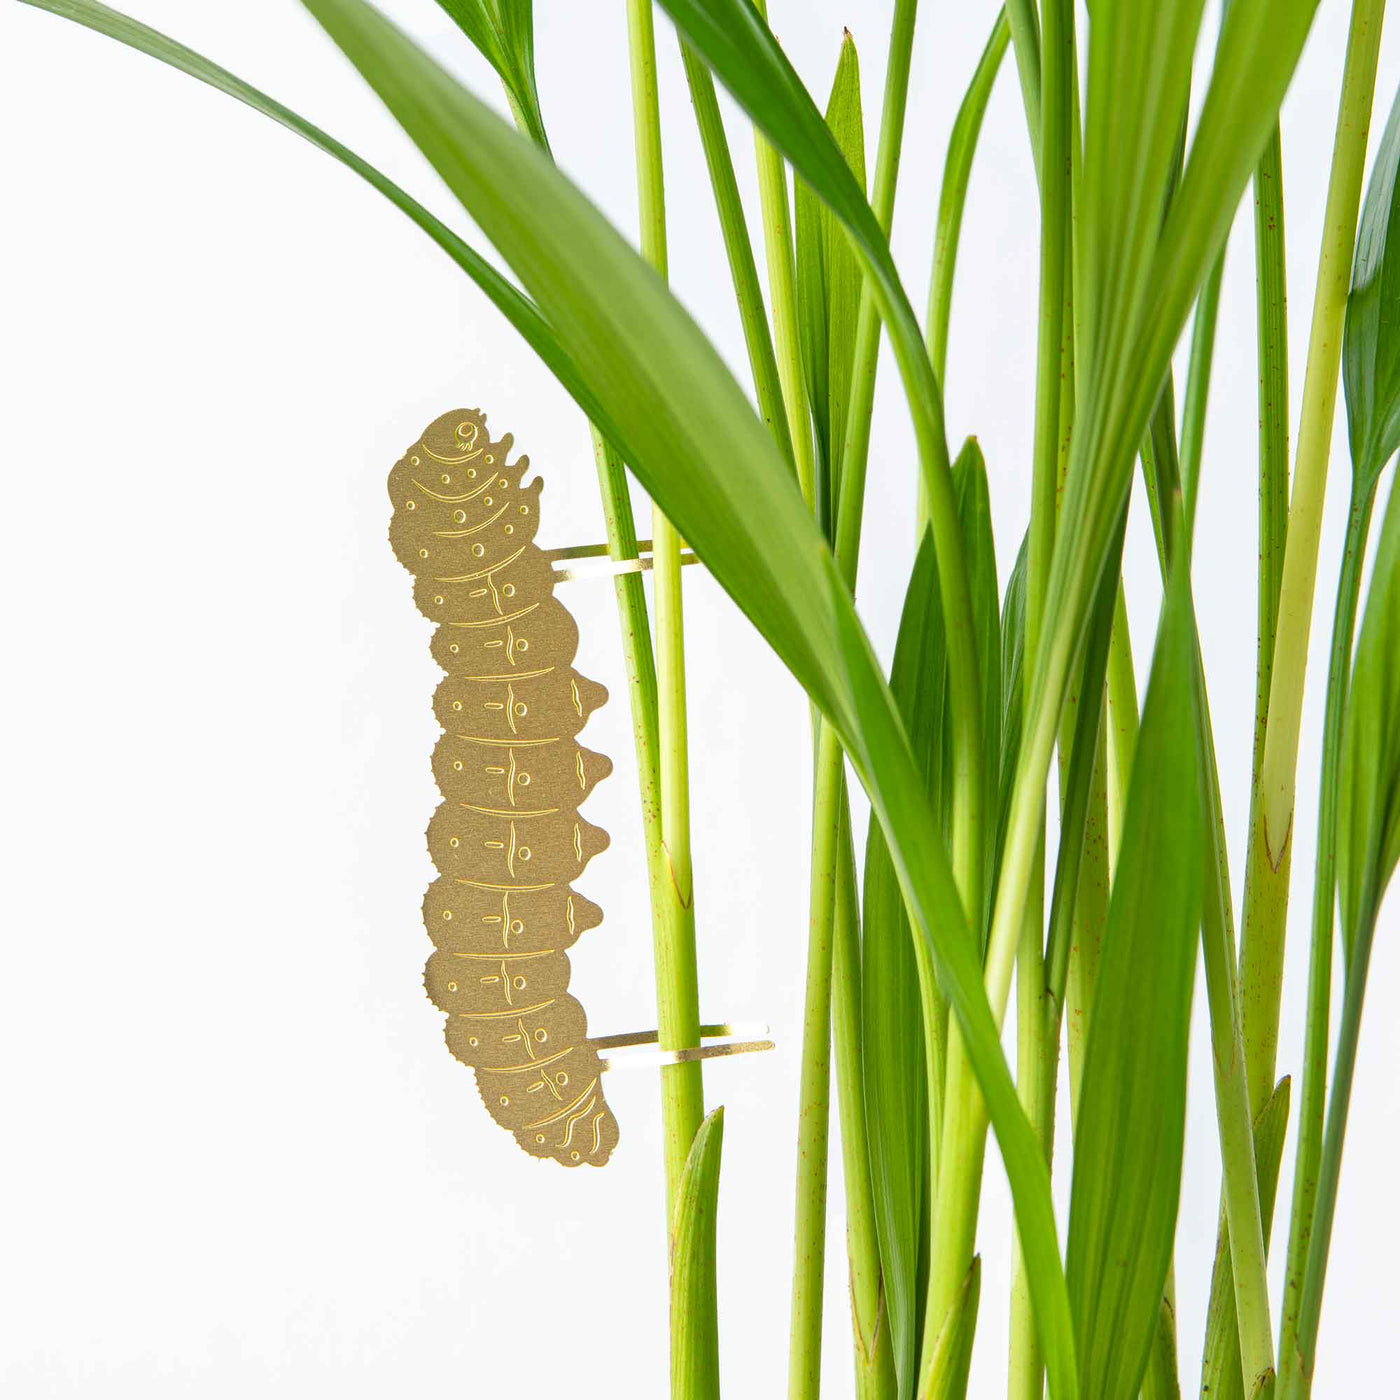 Caterpillar - Plant Animal